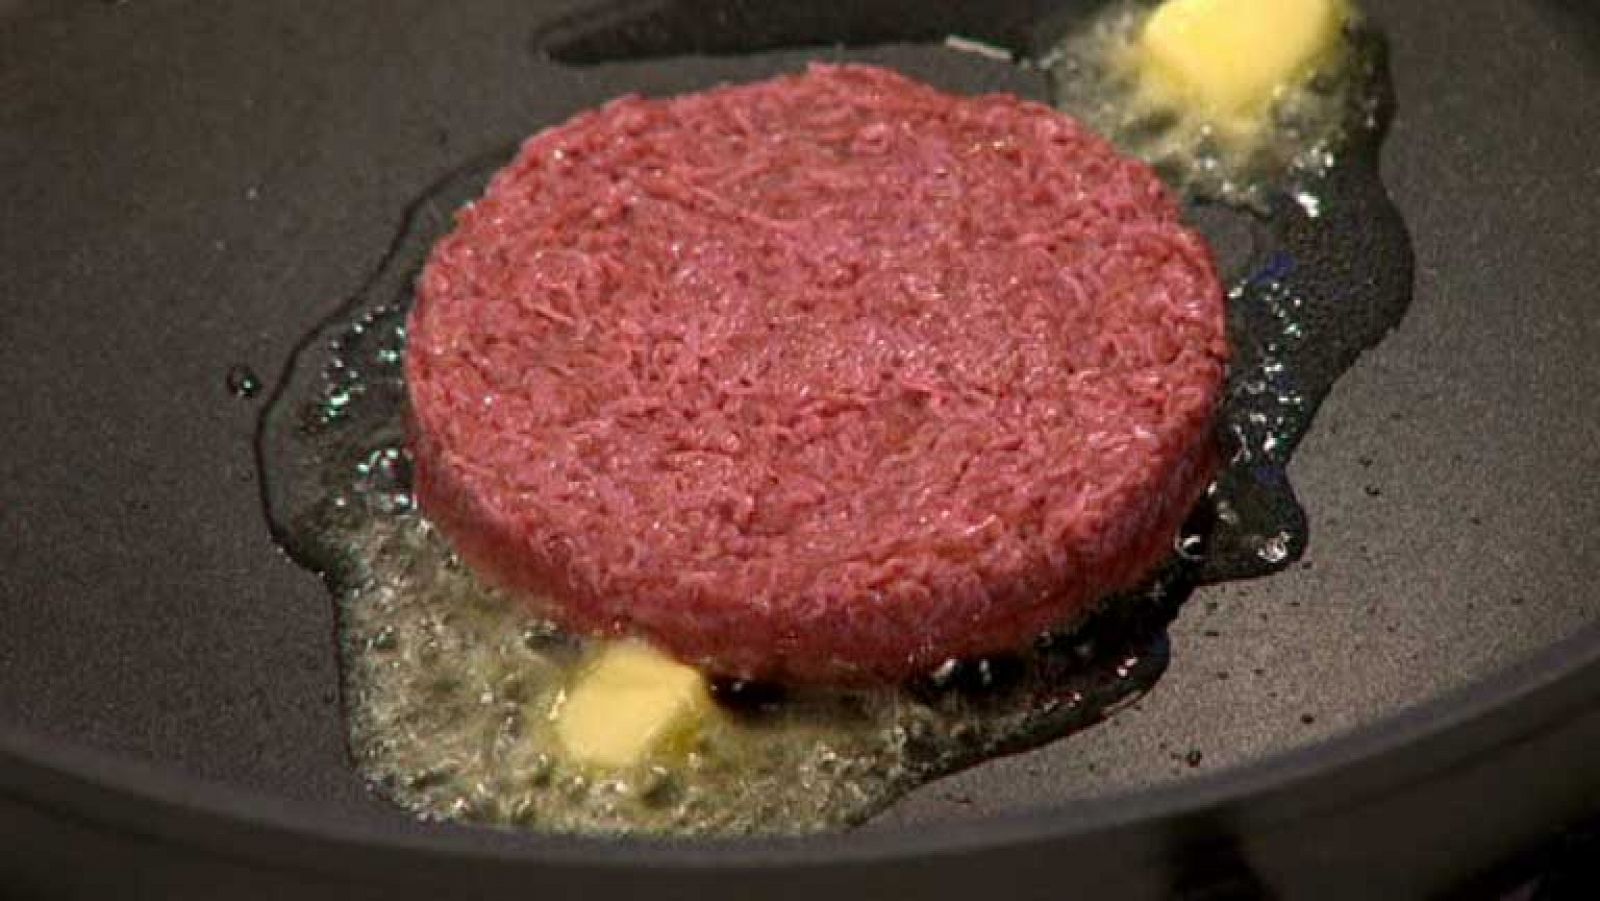 Telediario 1: Primera hamburguesa hecha con carne fabricada en laboratorio | RTVE Play